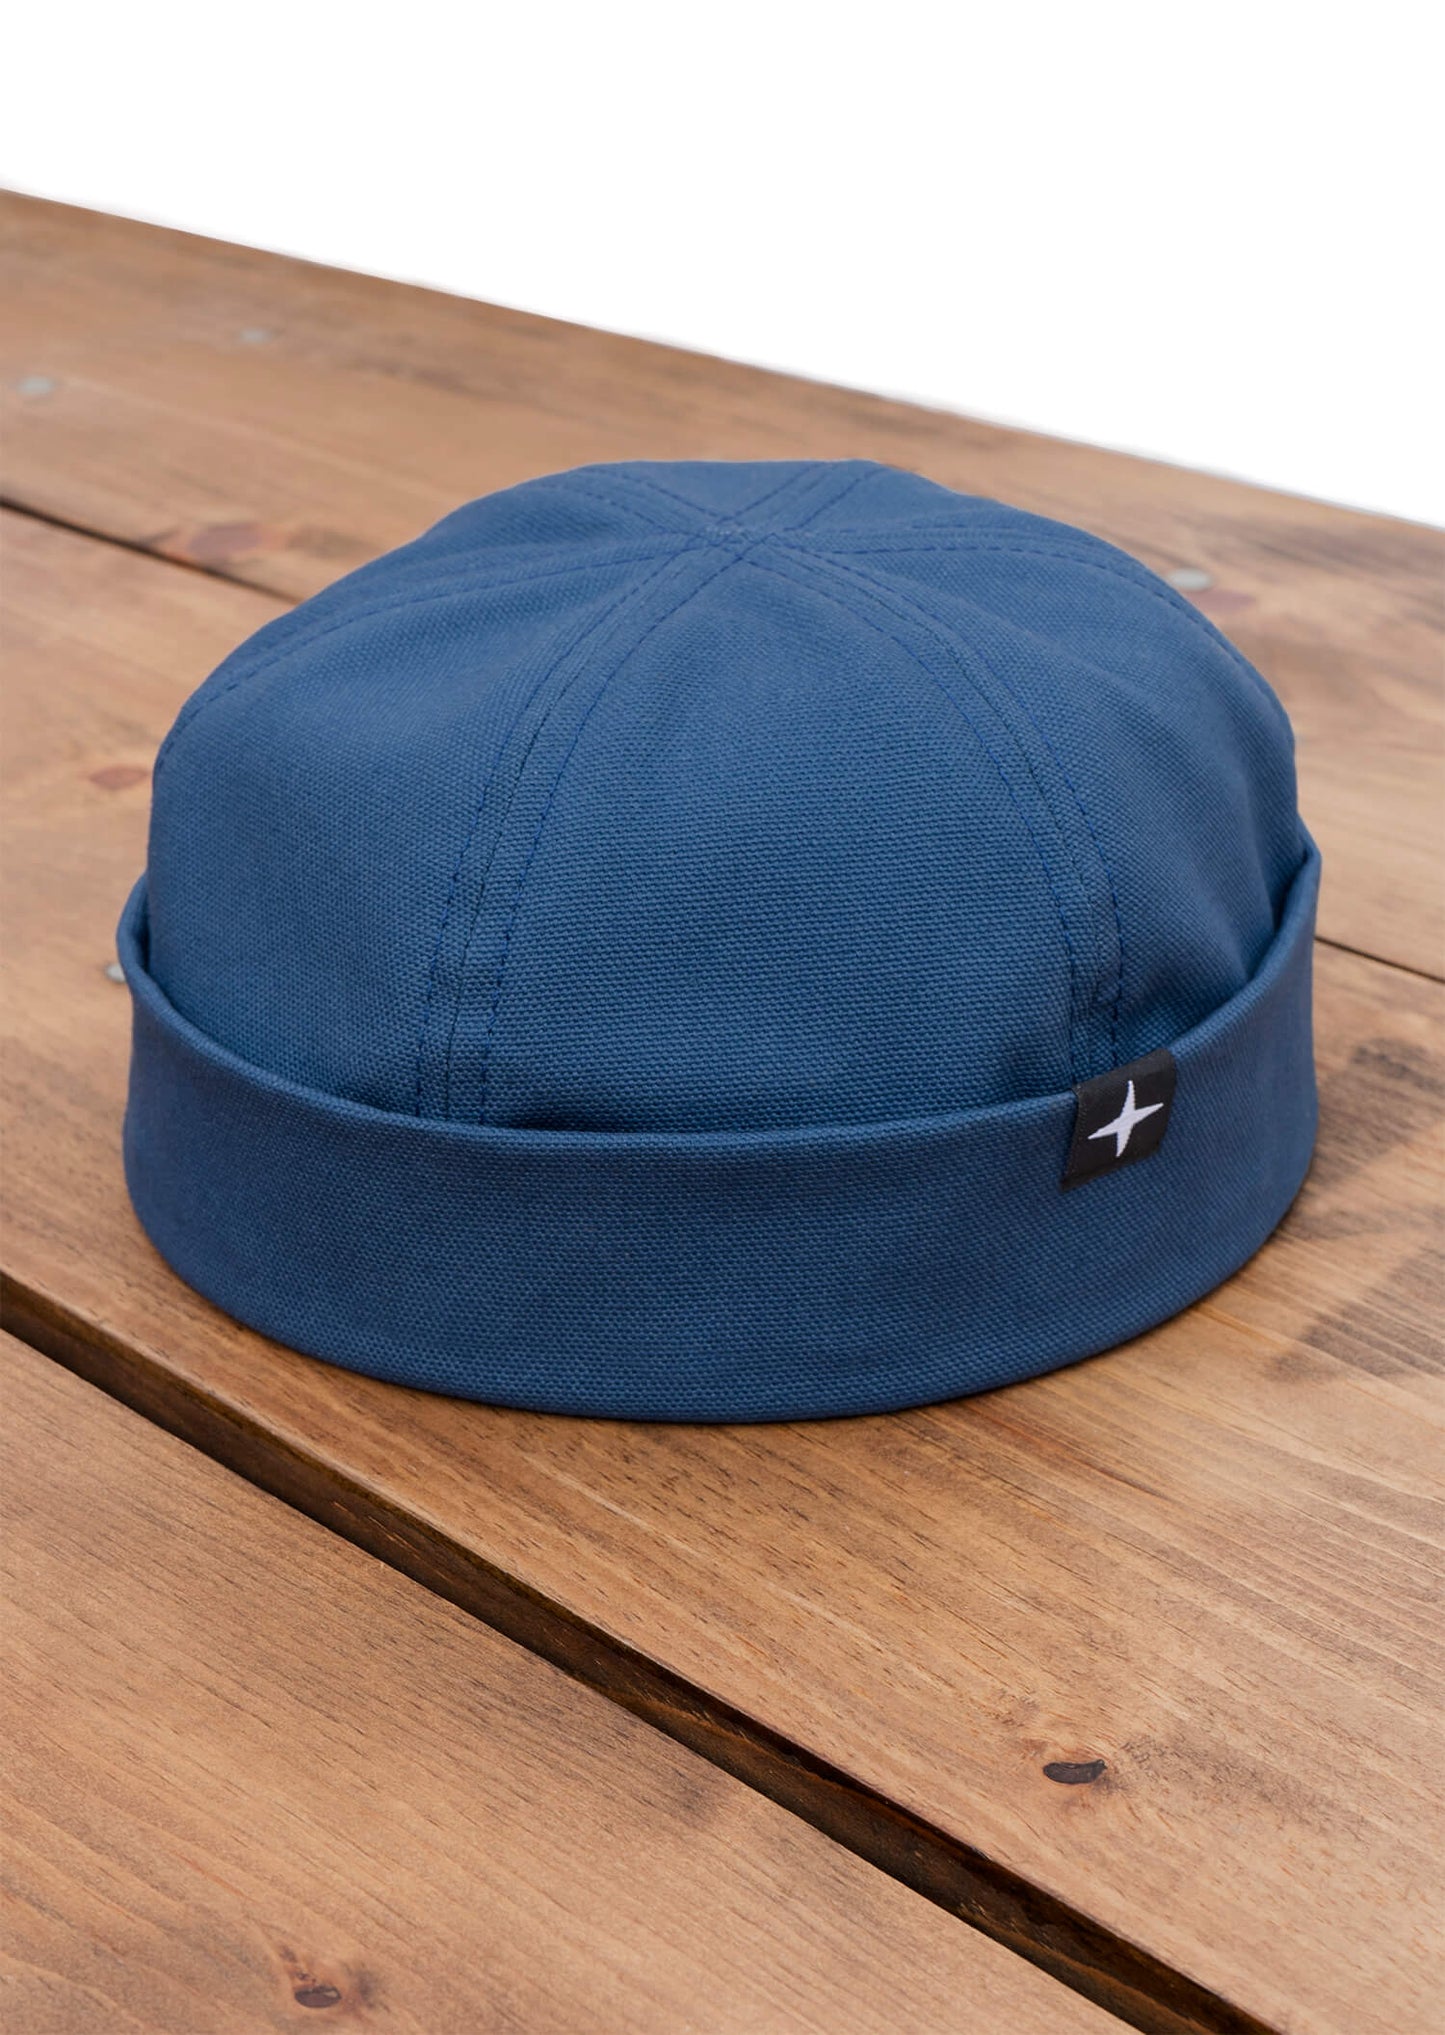 Docker hat - organic cotton - denim blue